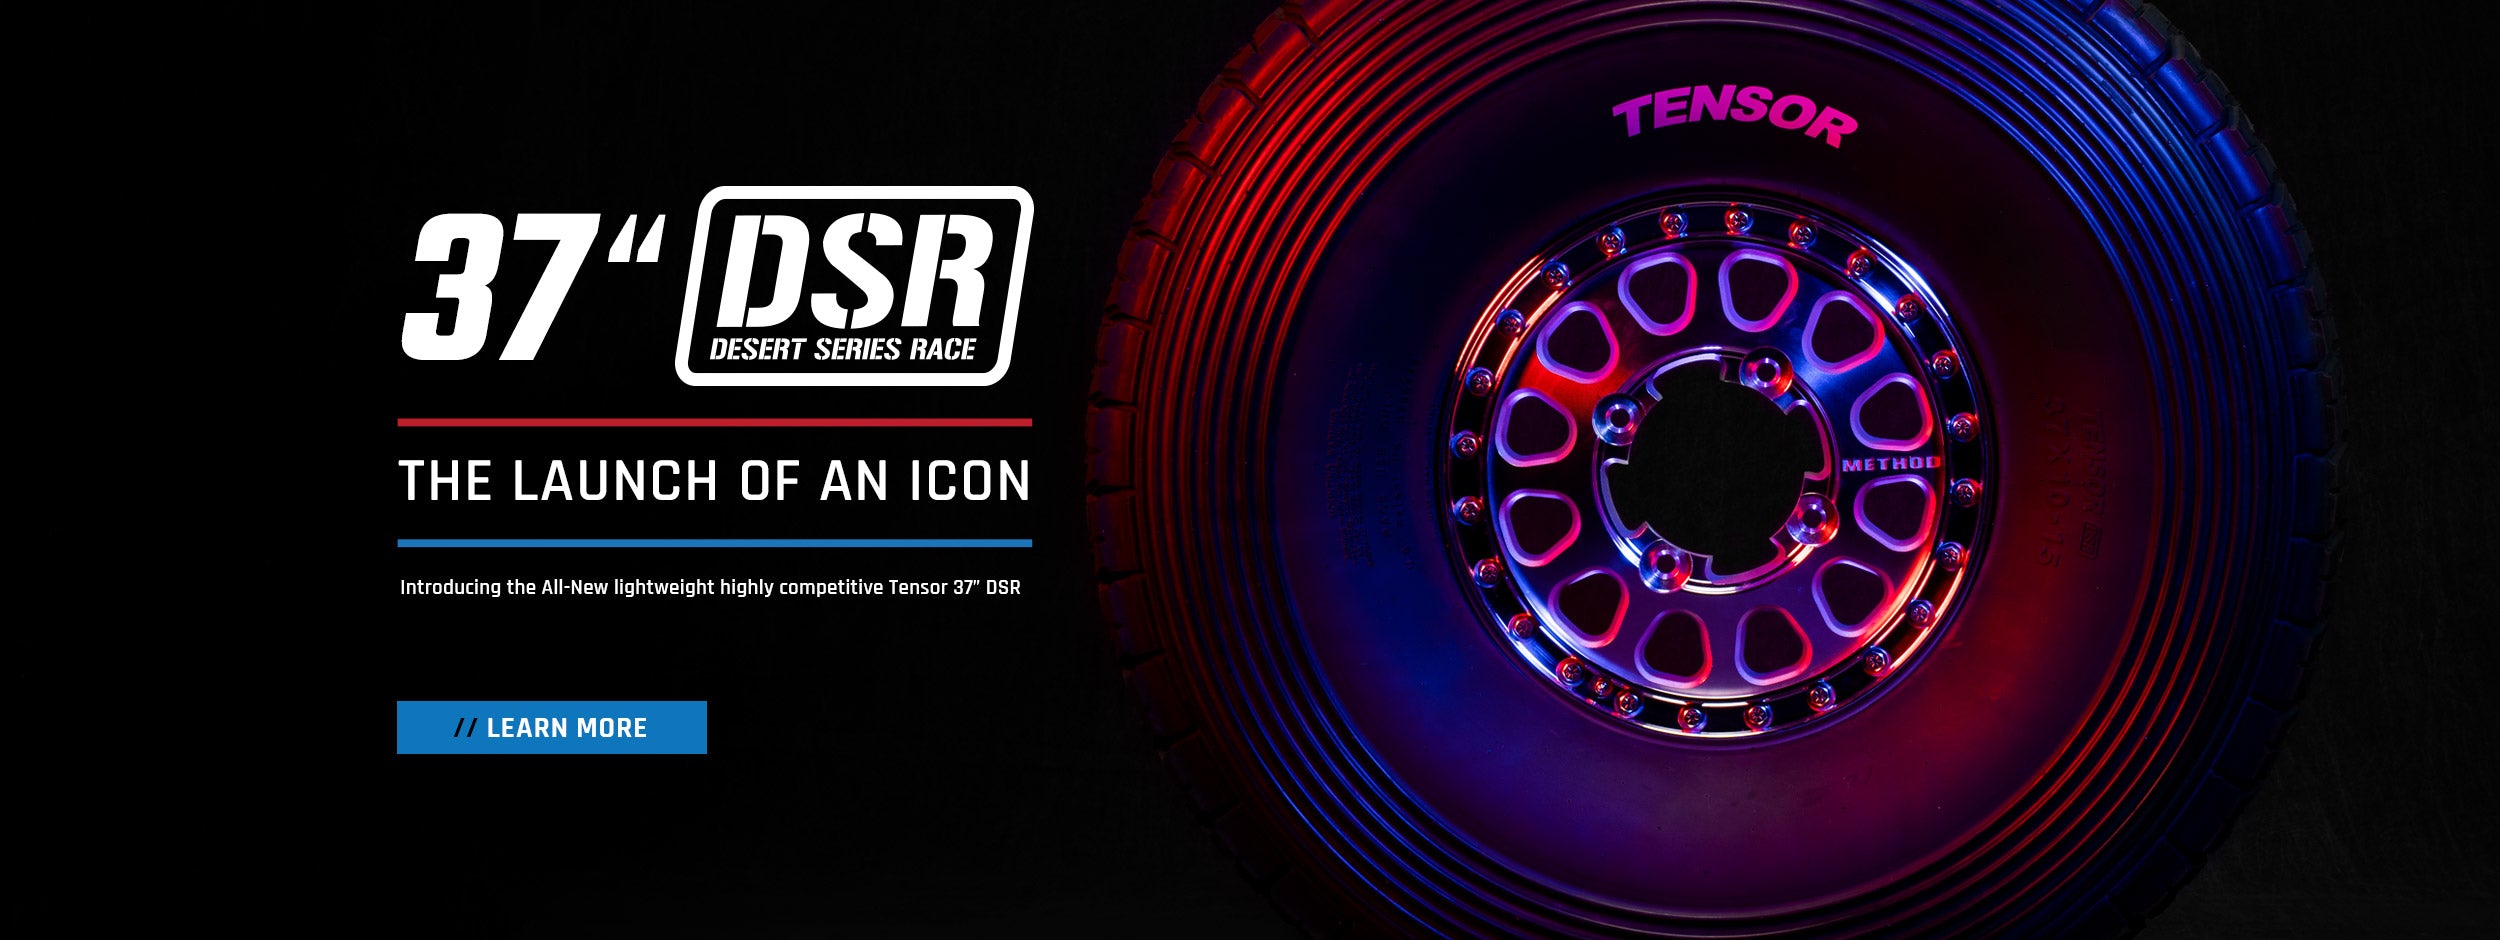 Tensor Tire, Tensor DSR Tire